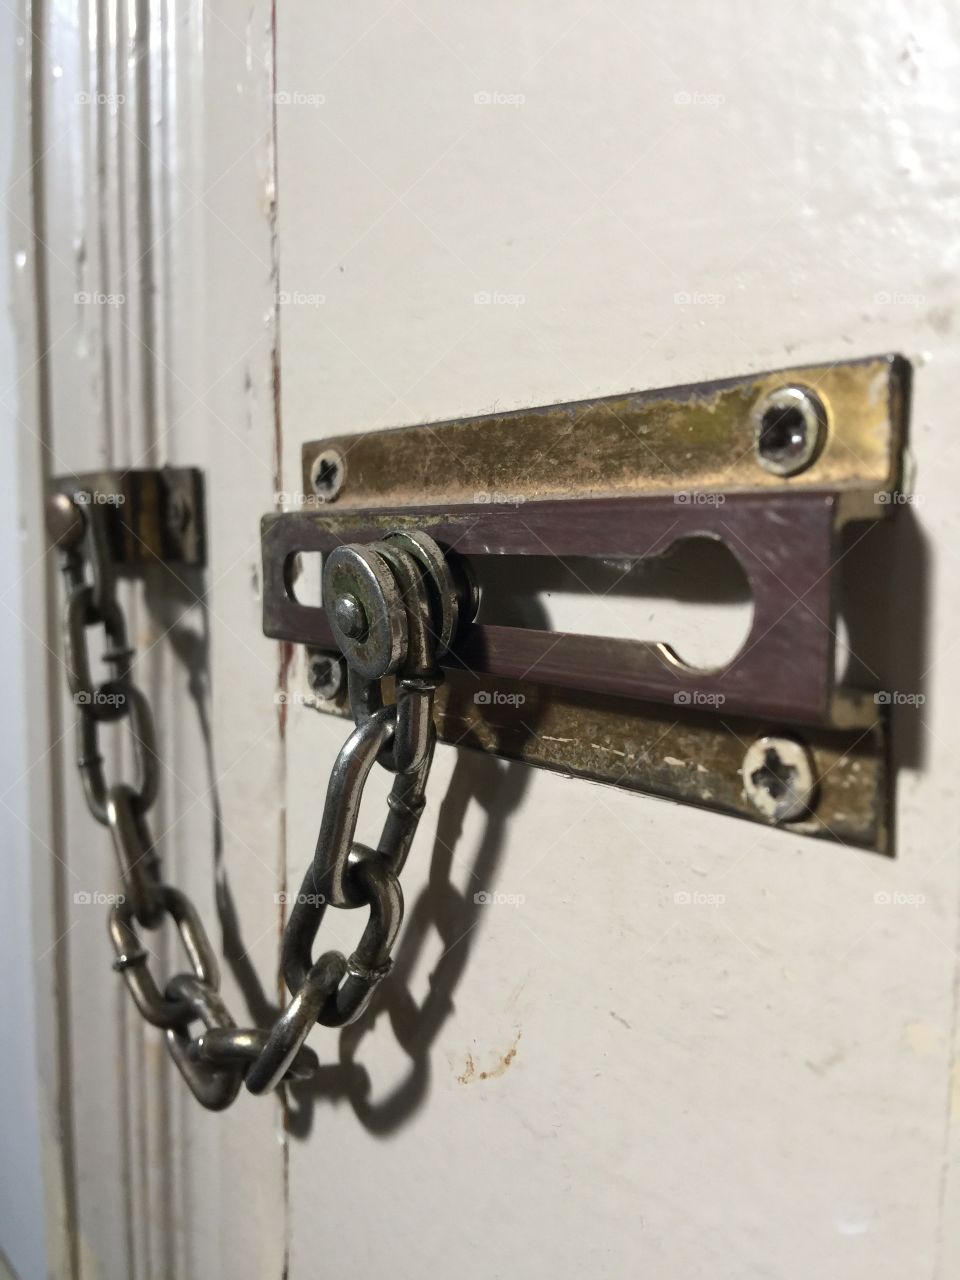 Under lock and key